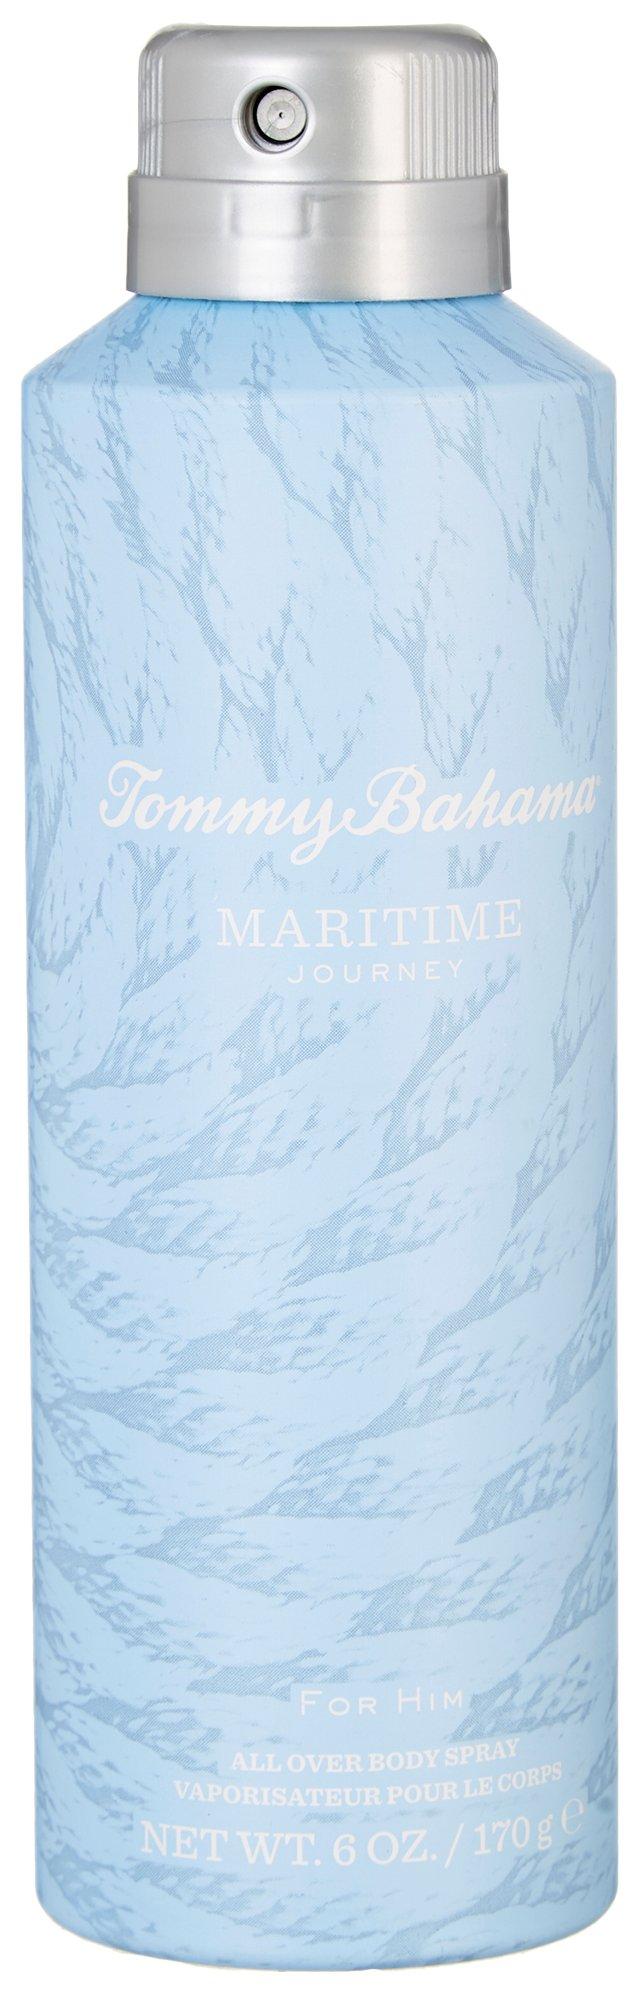 Tommy Bahama Men's Maritime Journey Body Spray 6 oz.